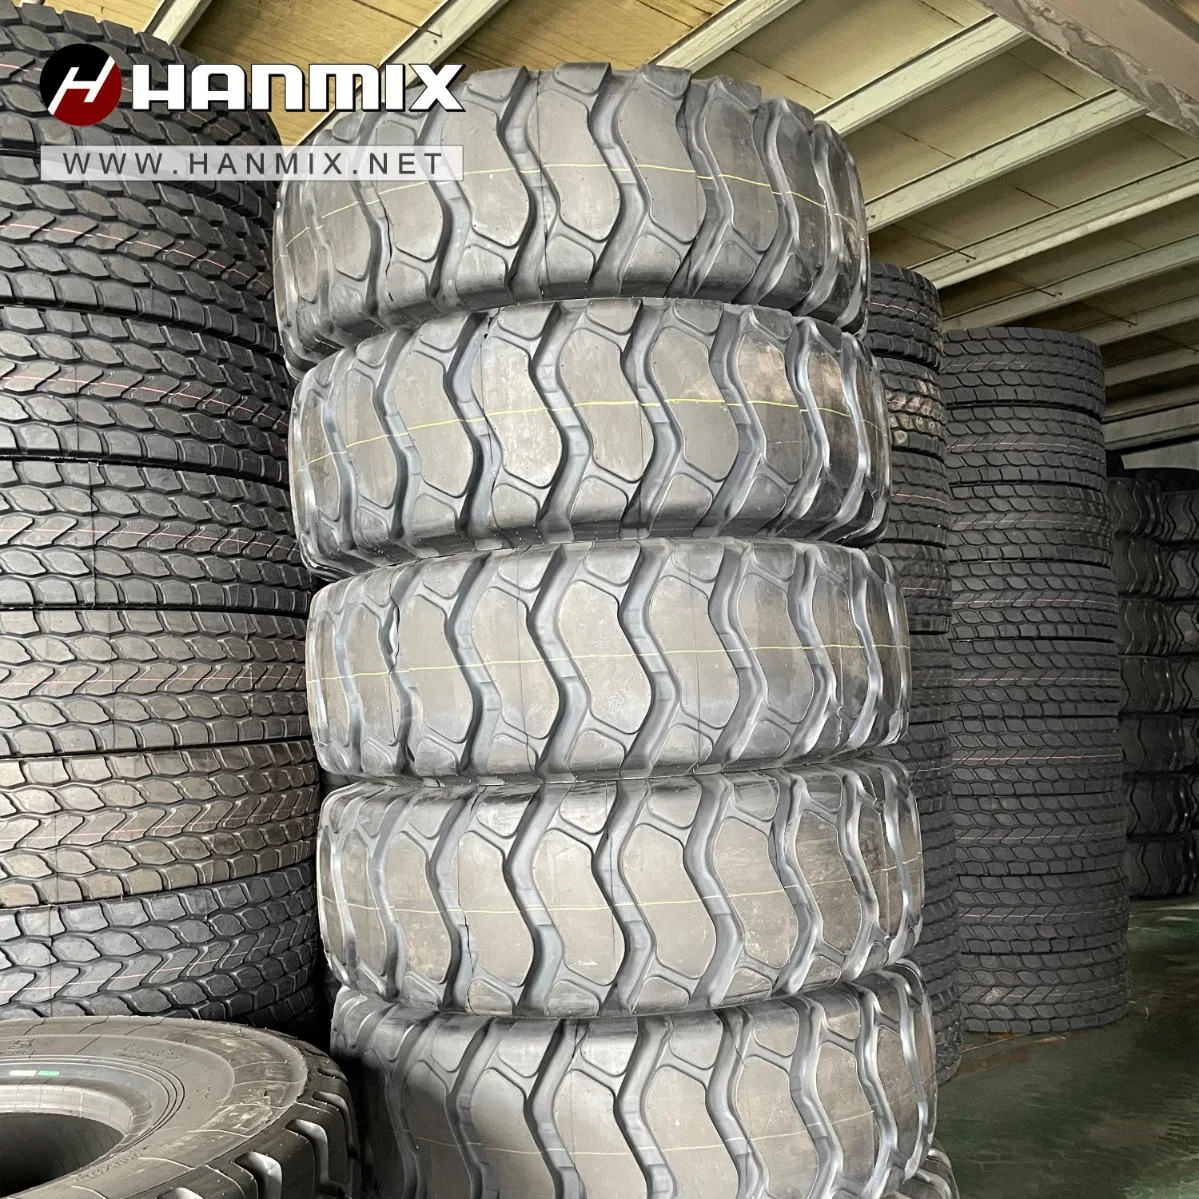 Neumático para todoterreno Hanmix neumático para uso en carretera E3/L3 Cargador neumático de acero Neumático radial 17.5r25 (445/80R25) 20.5r25 (525/80R25)